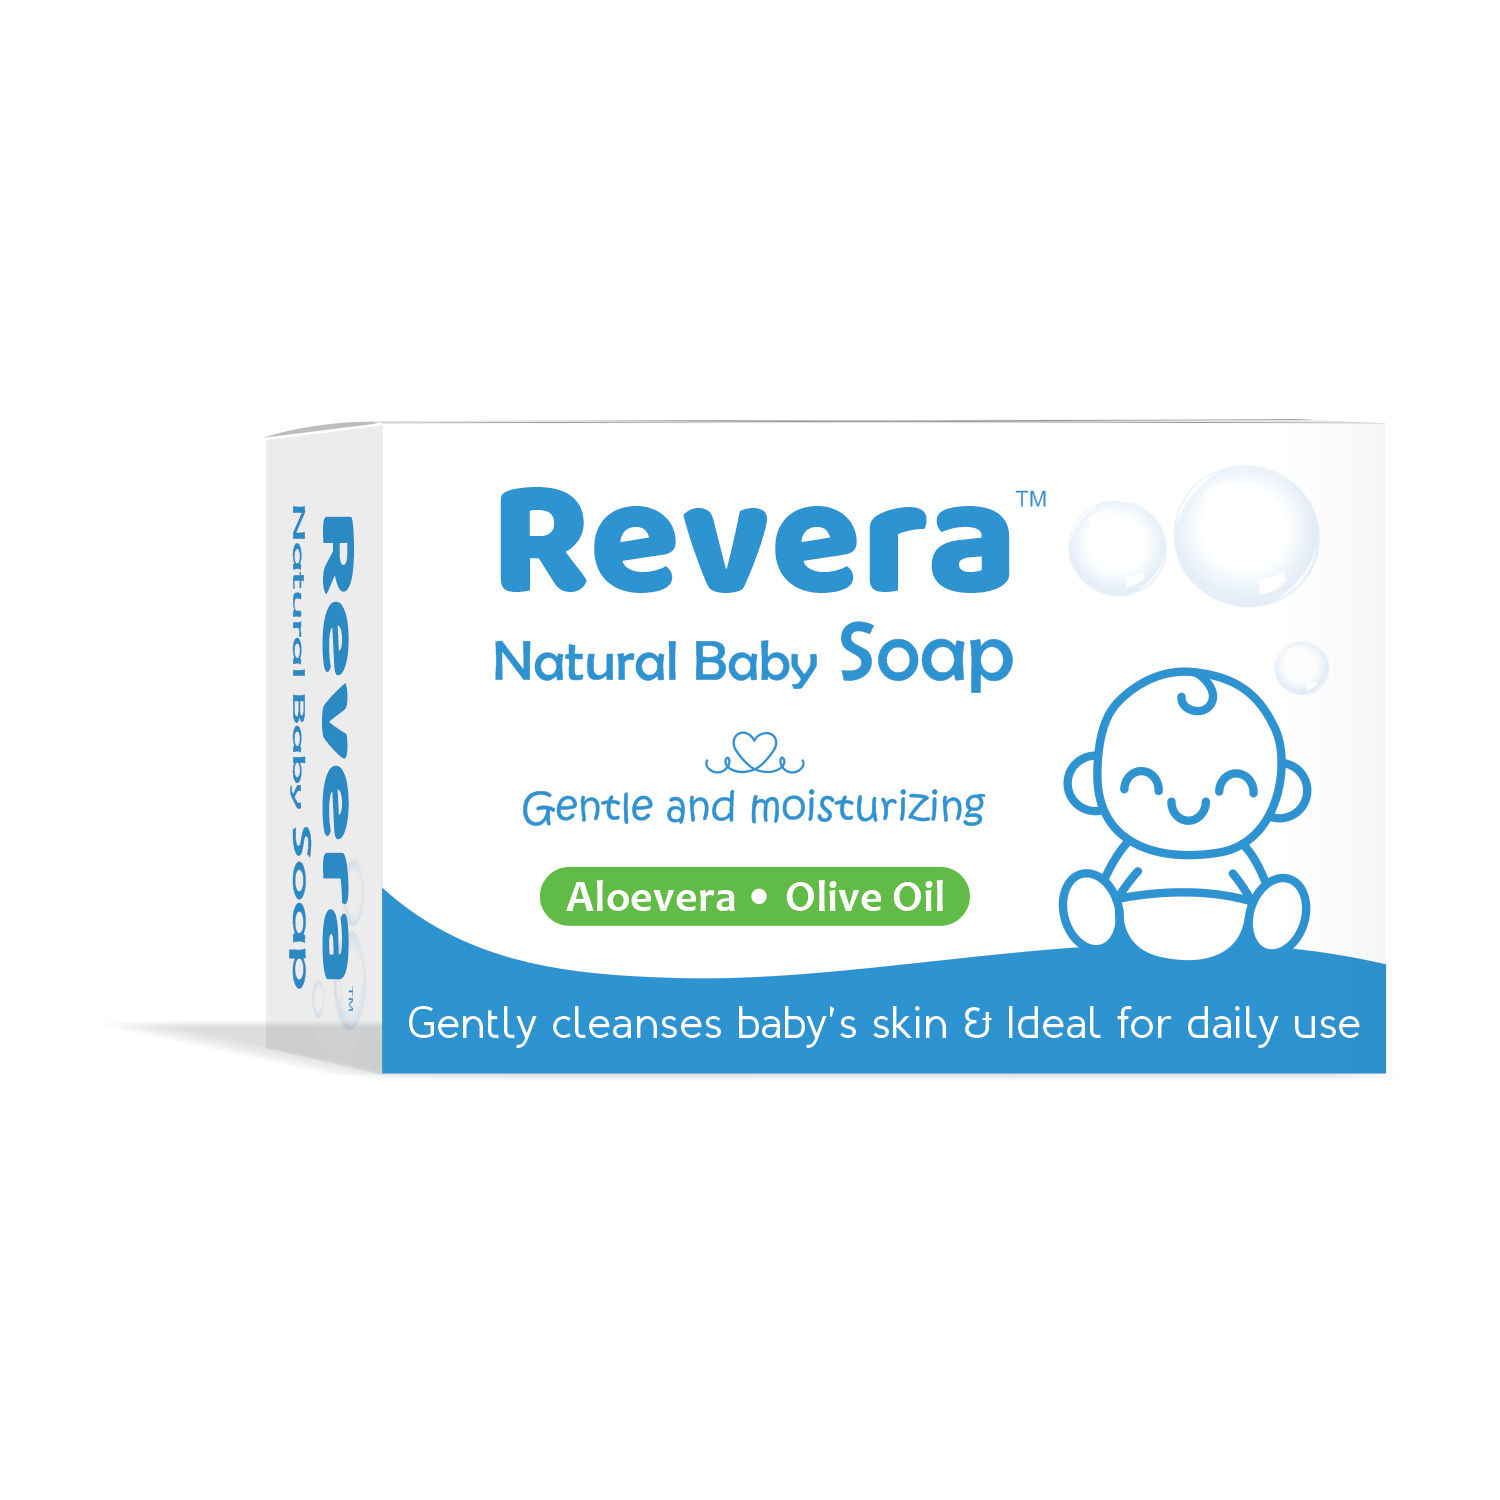 Revera Natural Baby Soap